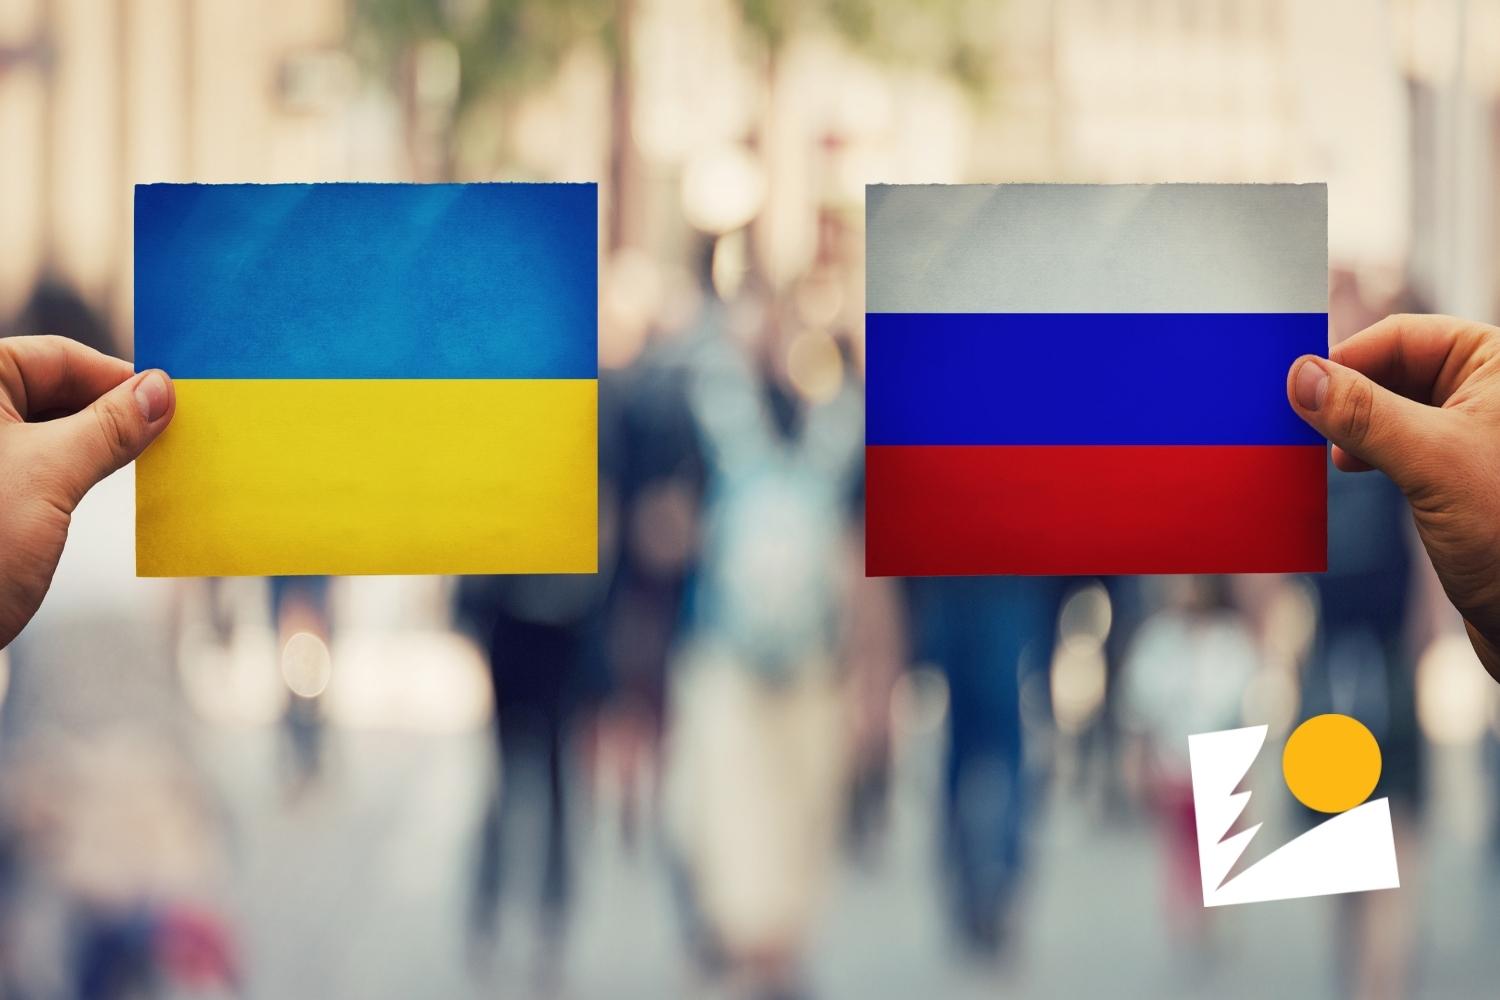 Ukranian, Russian flags